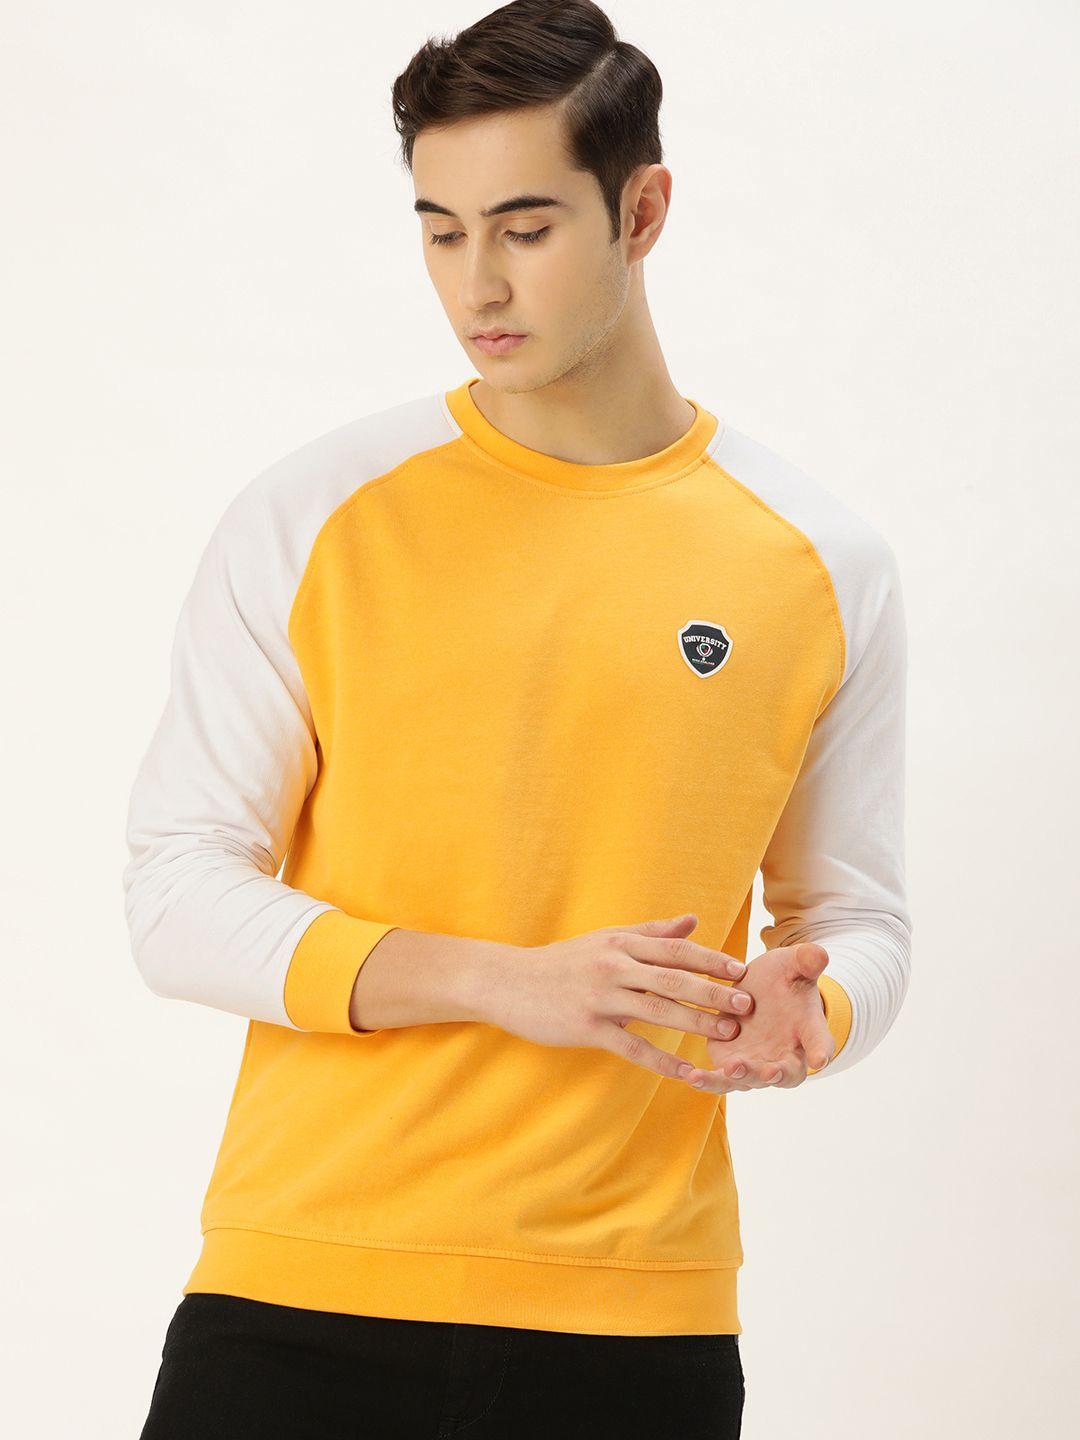 peter england casuals men yellow & white raglan sleeves sweatshirt